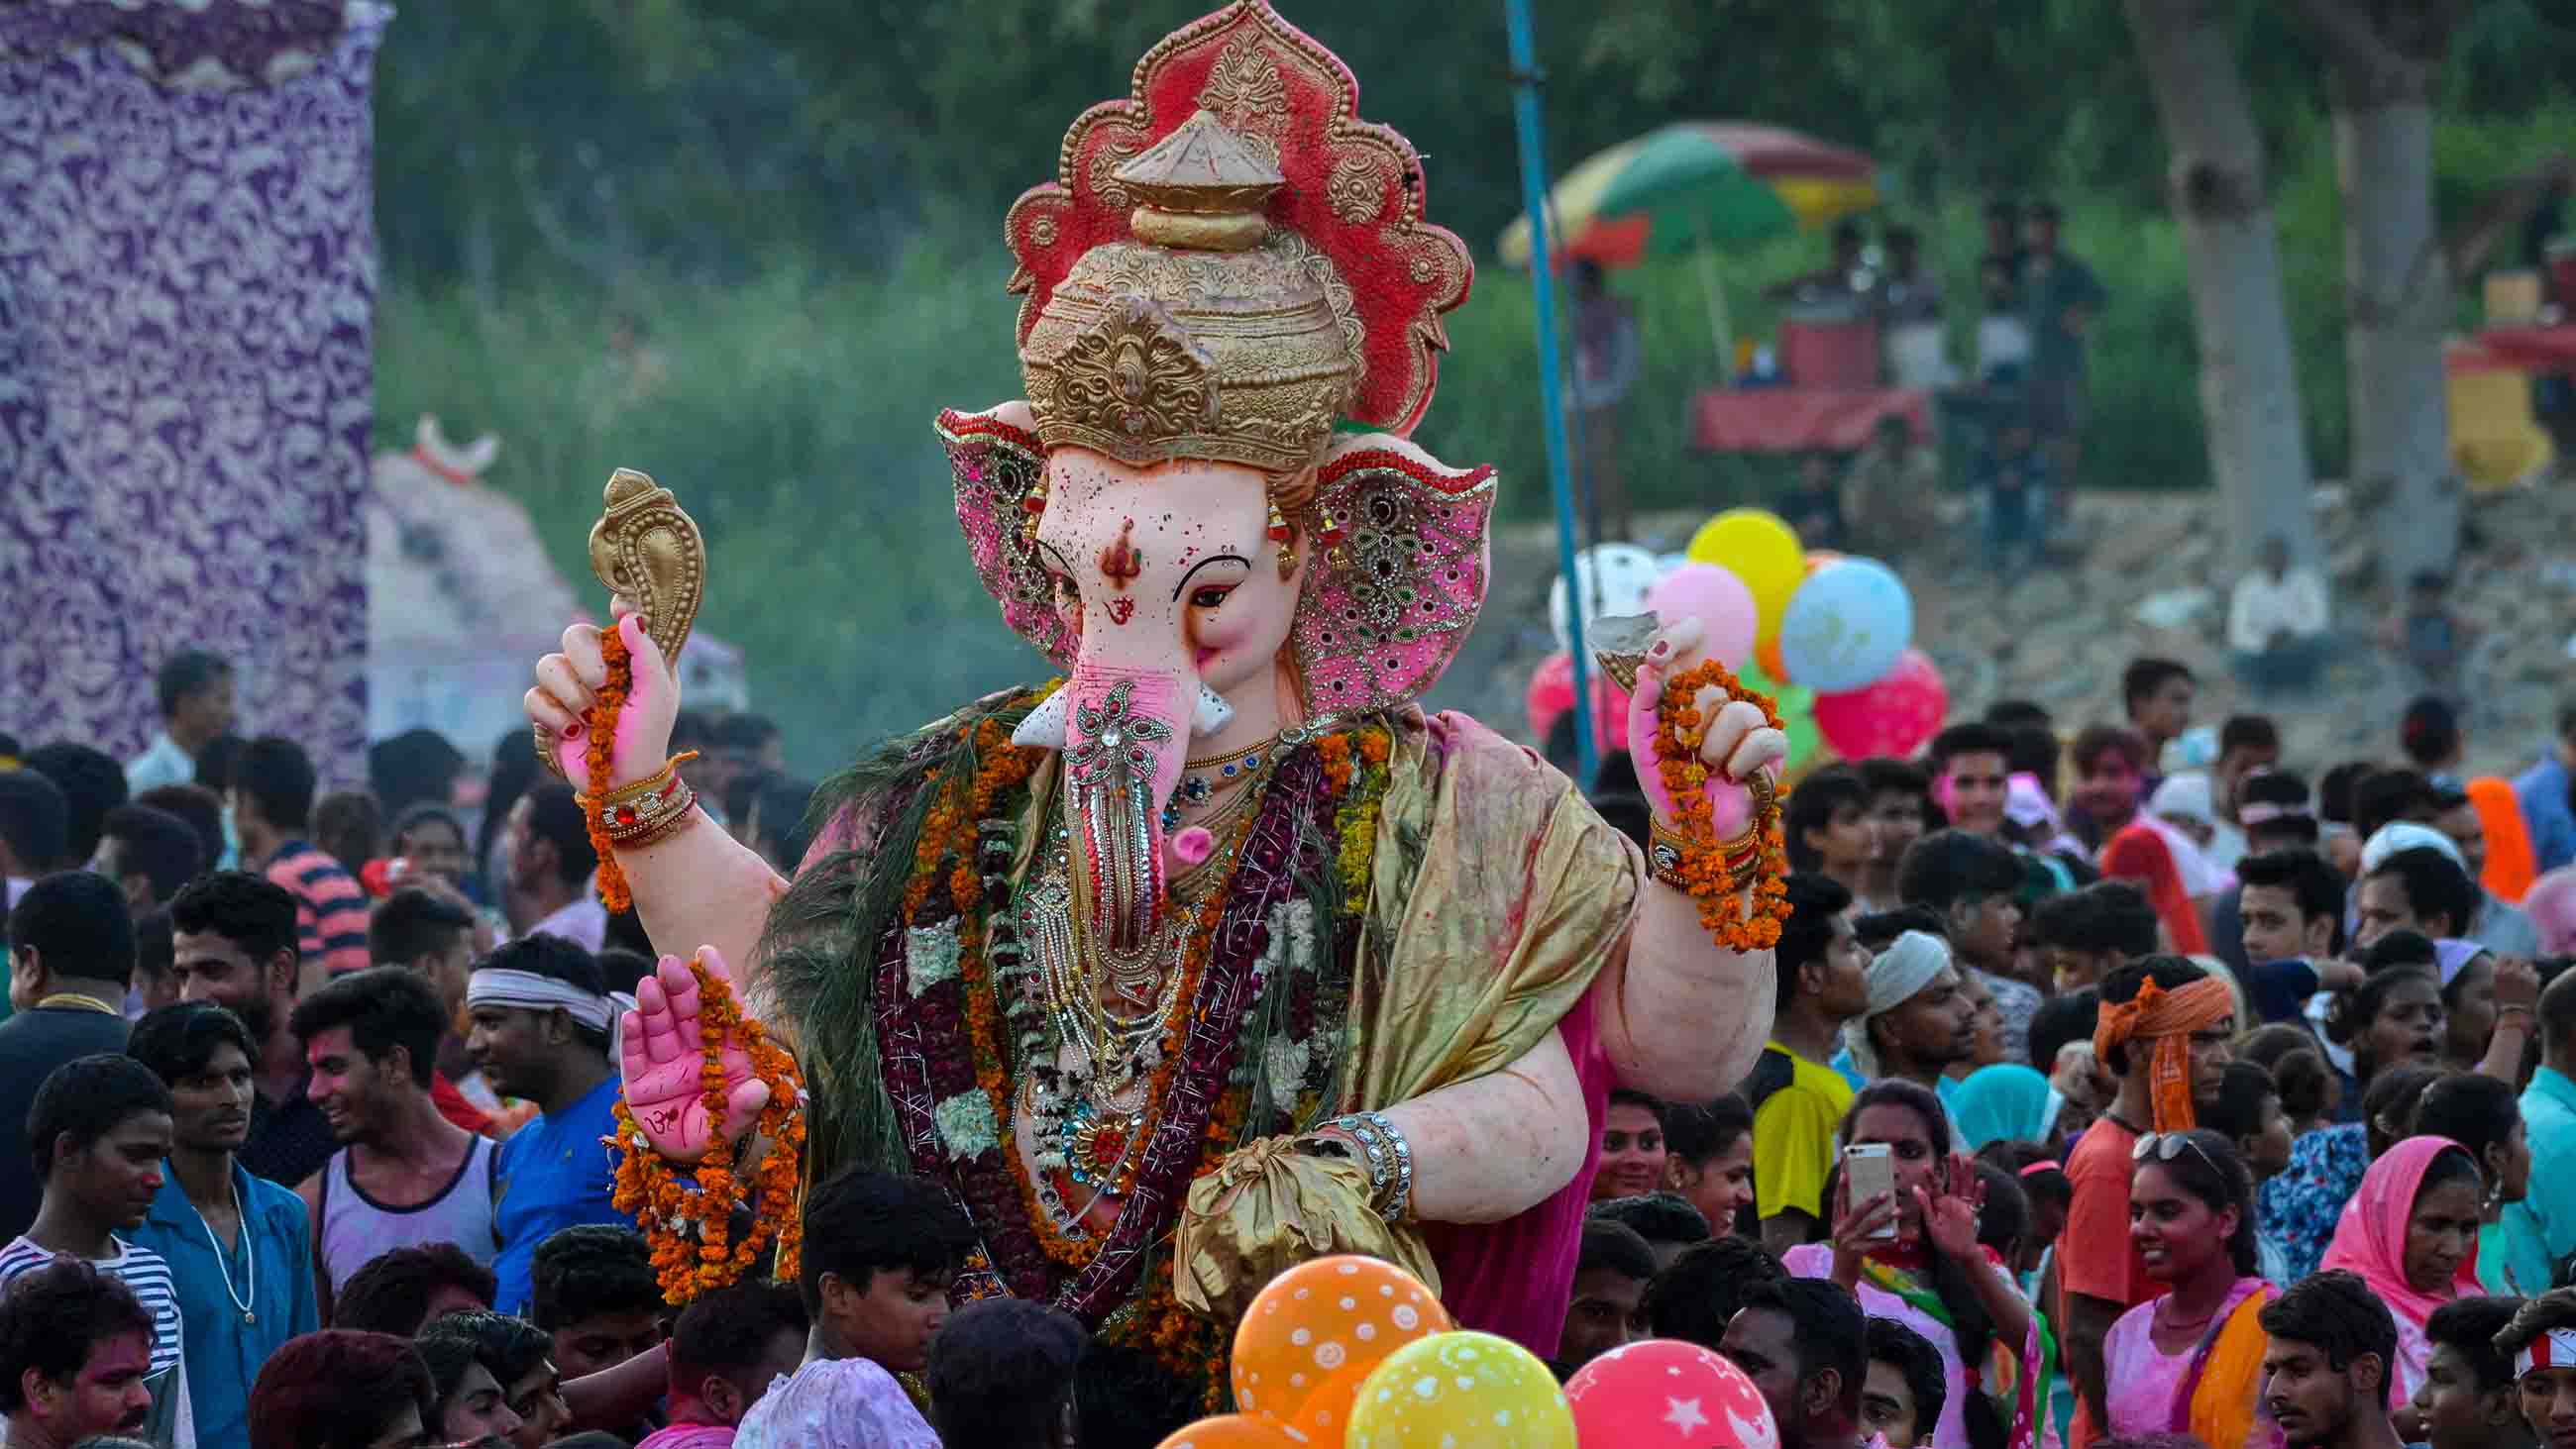 Ganesh Chaturthi Festival, Kalindi Kunj, New Delhi, India- September 5, 2017: People gathered to observe the ceremonial immersion of Lord Ganesh Idols into river Yamuna at Kalindi Kunj, New Delhi, India.